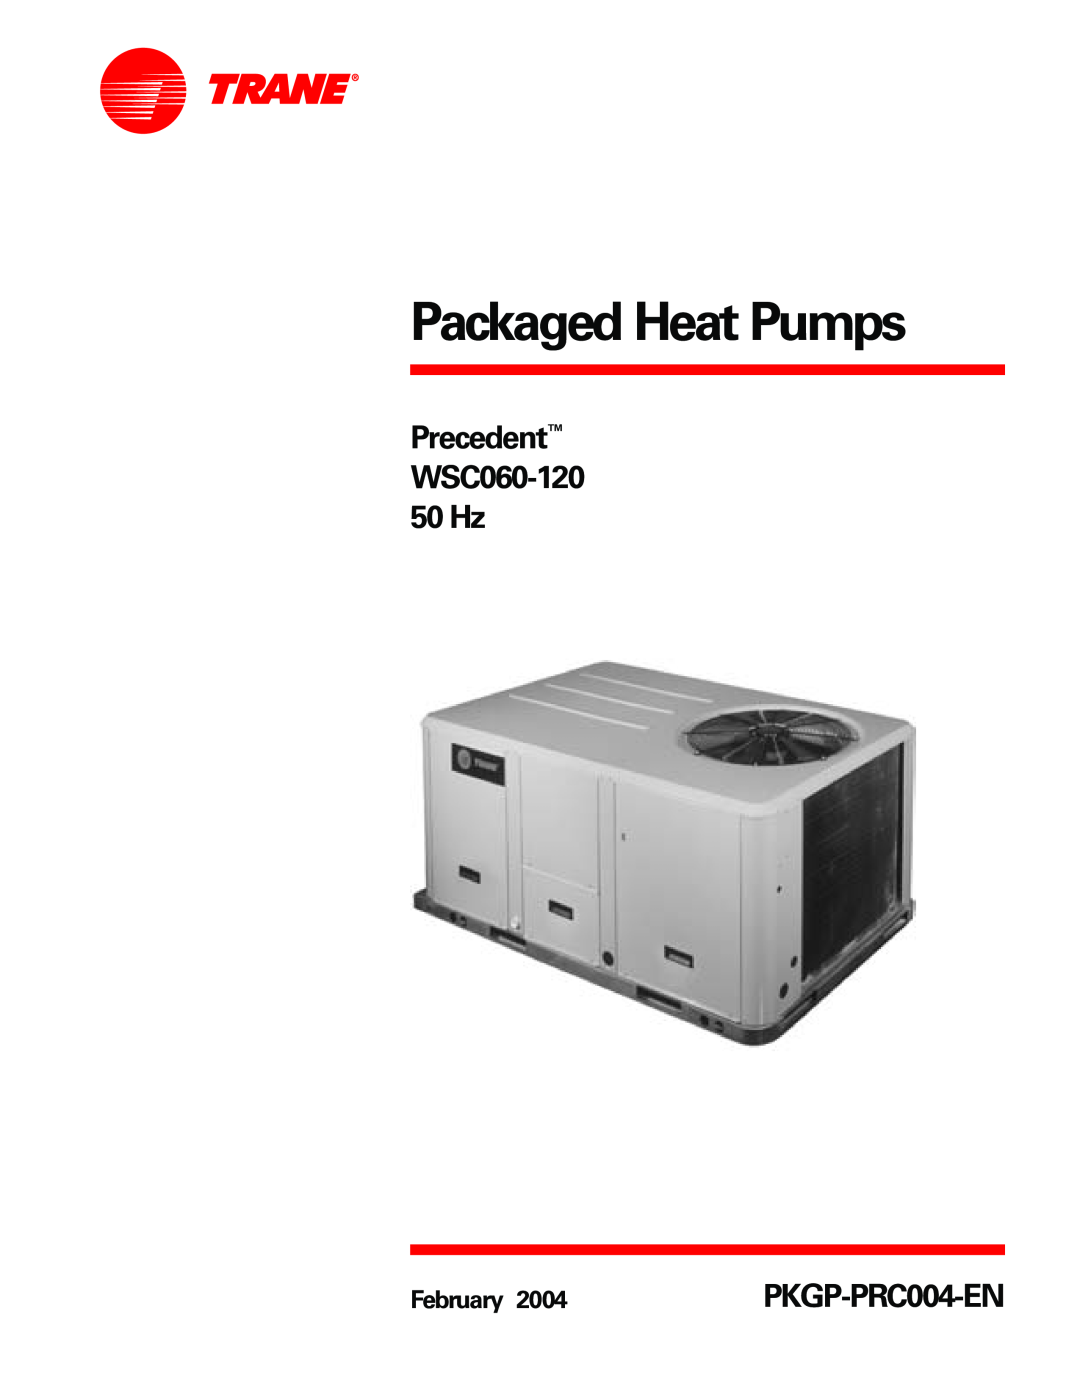 Trane manual PKGP-PRC004-EN, Packaged Heat Pumps, Precedent WSC060-120 50 Hz, February 